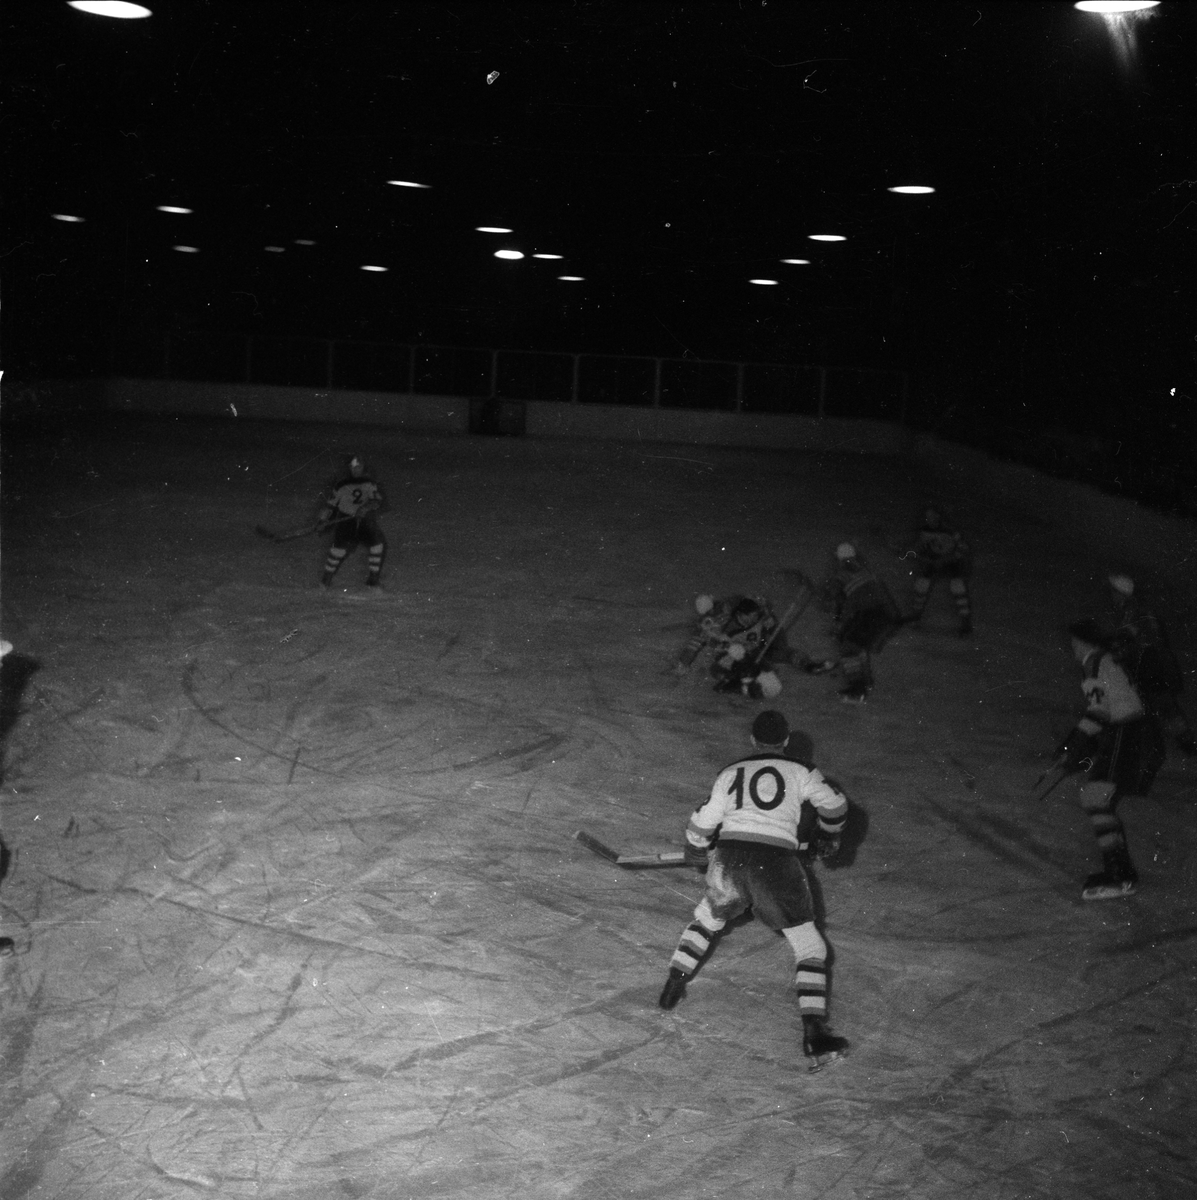 Ishockey - Vesta-M.P., sannolikt Uppsala januari 1952